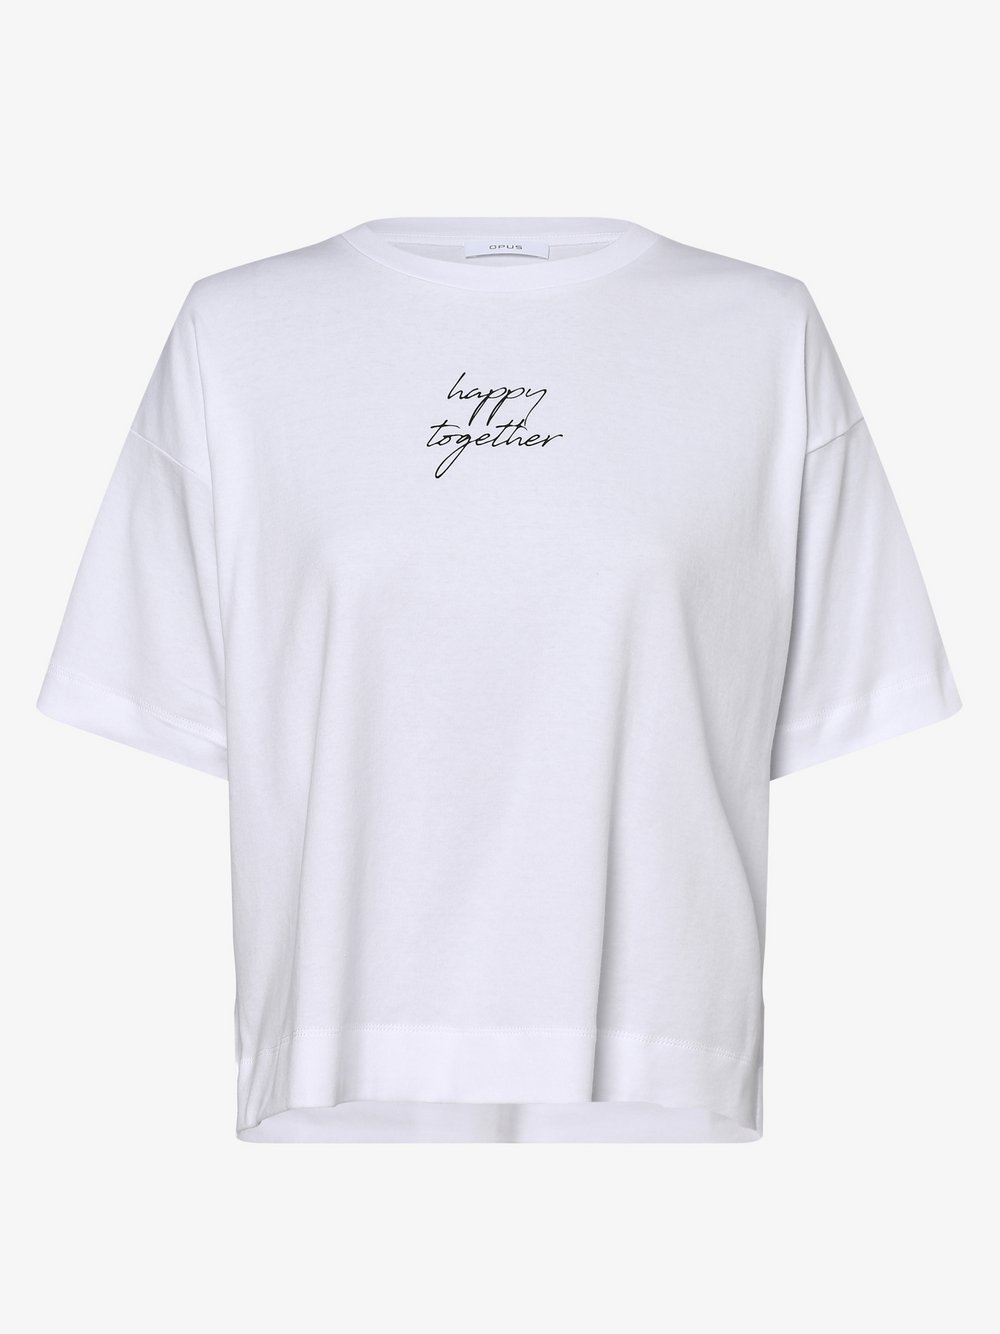 Opus - T-shirt damski – Setty Lettering, biały